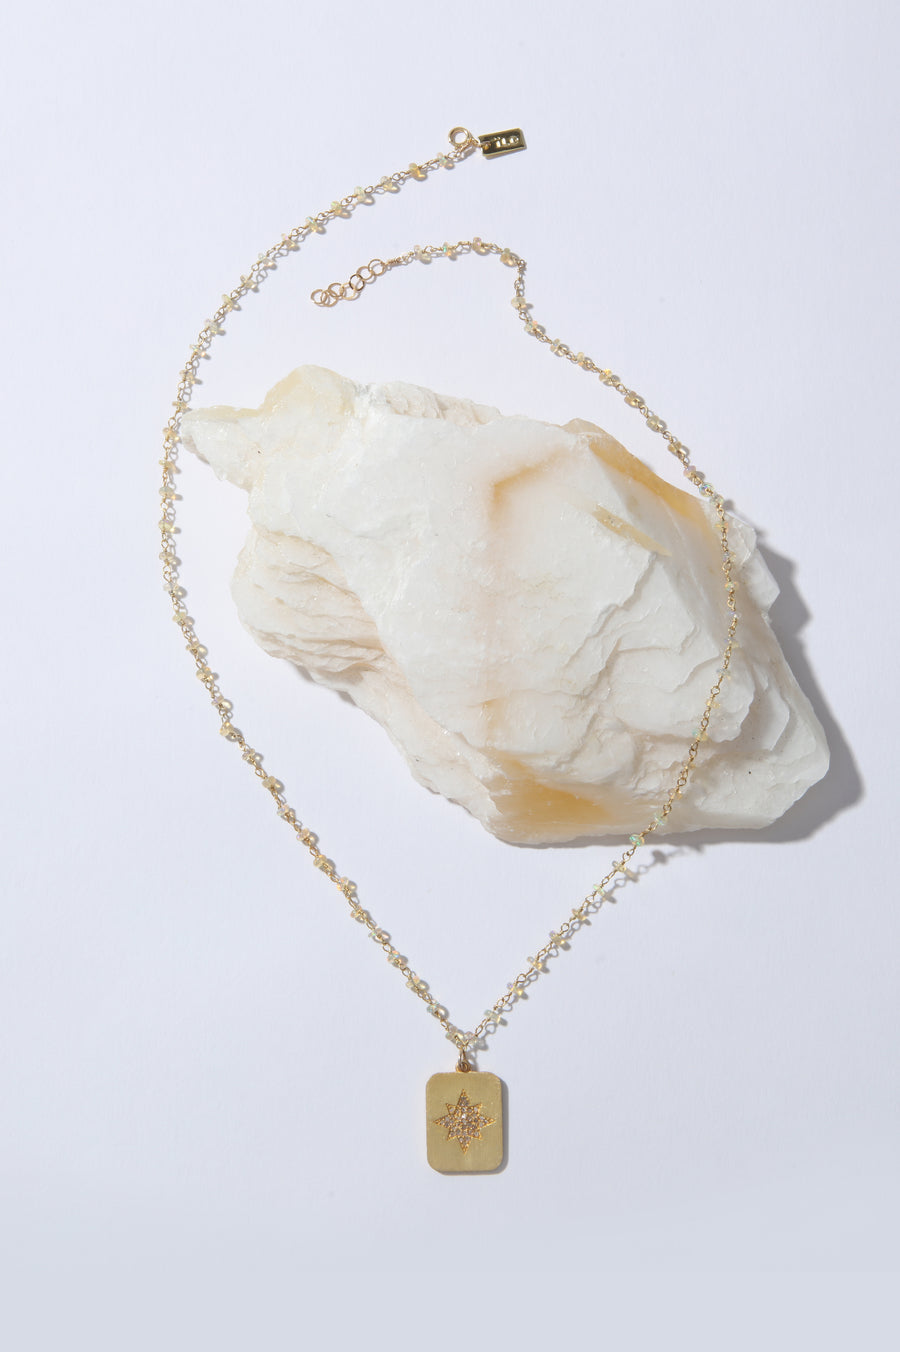 Sagrado Necklace -  Small Star Pendant on Opal